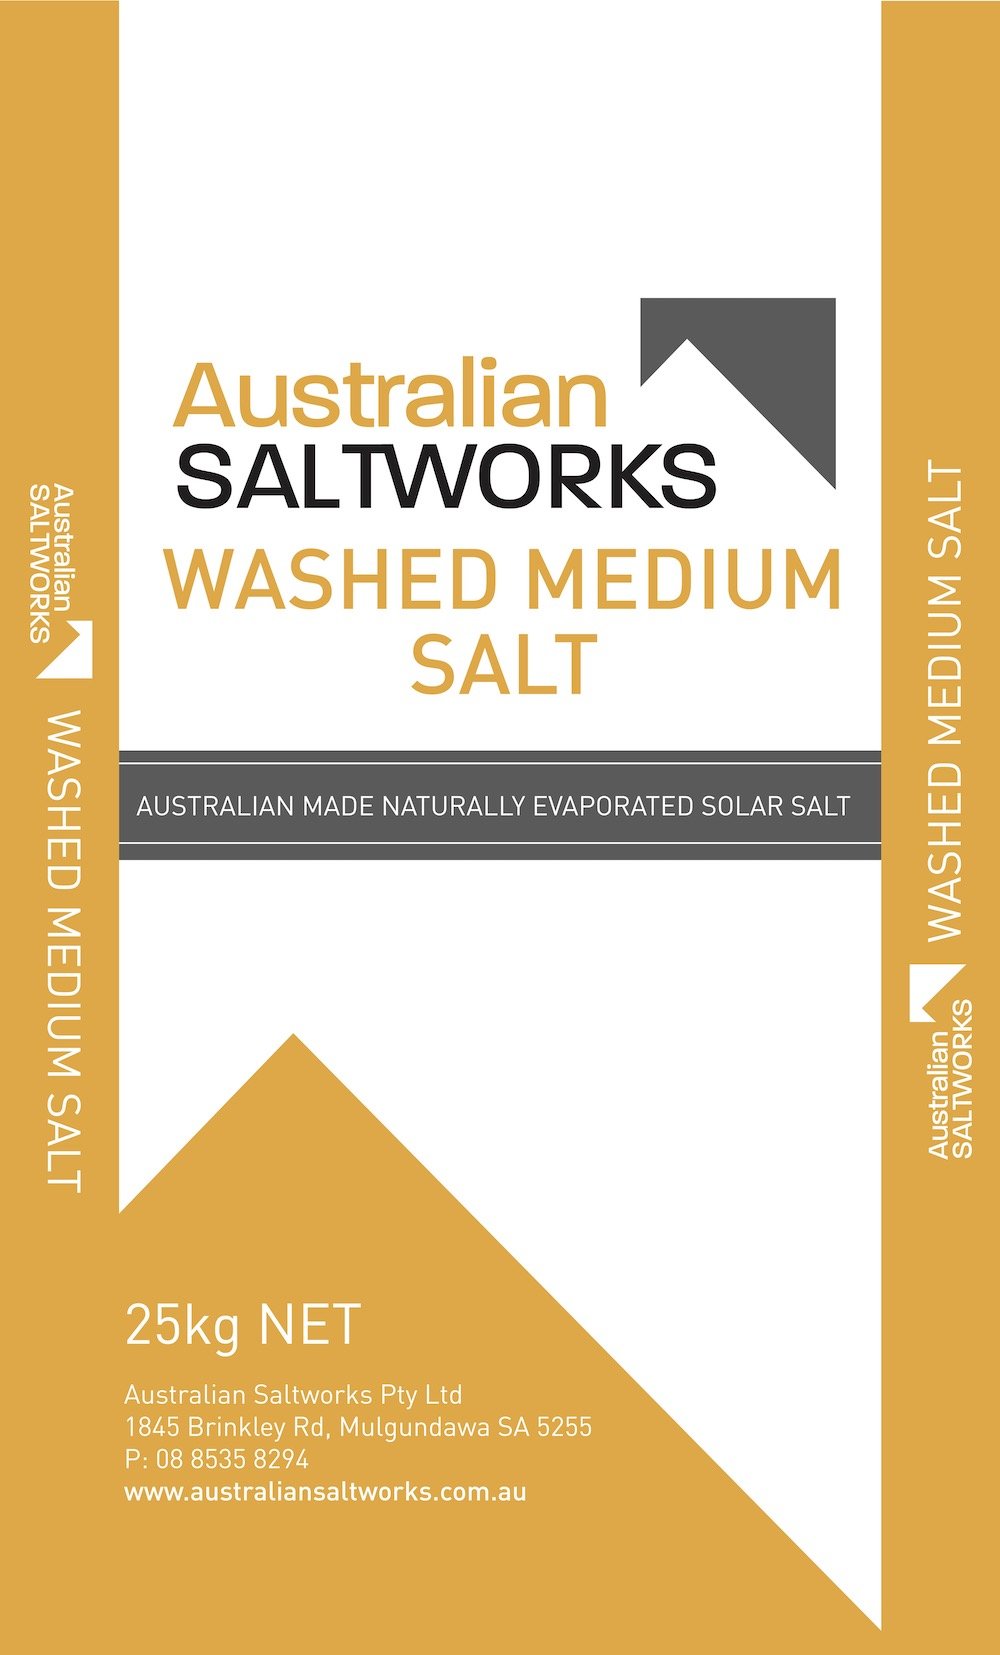 Saltworks Washed Medium Salt.jpg